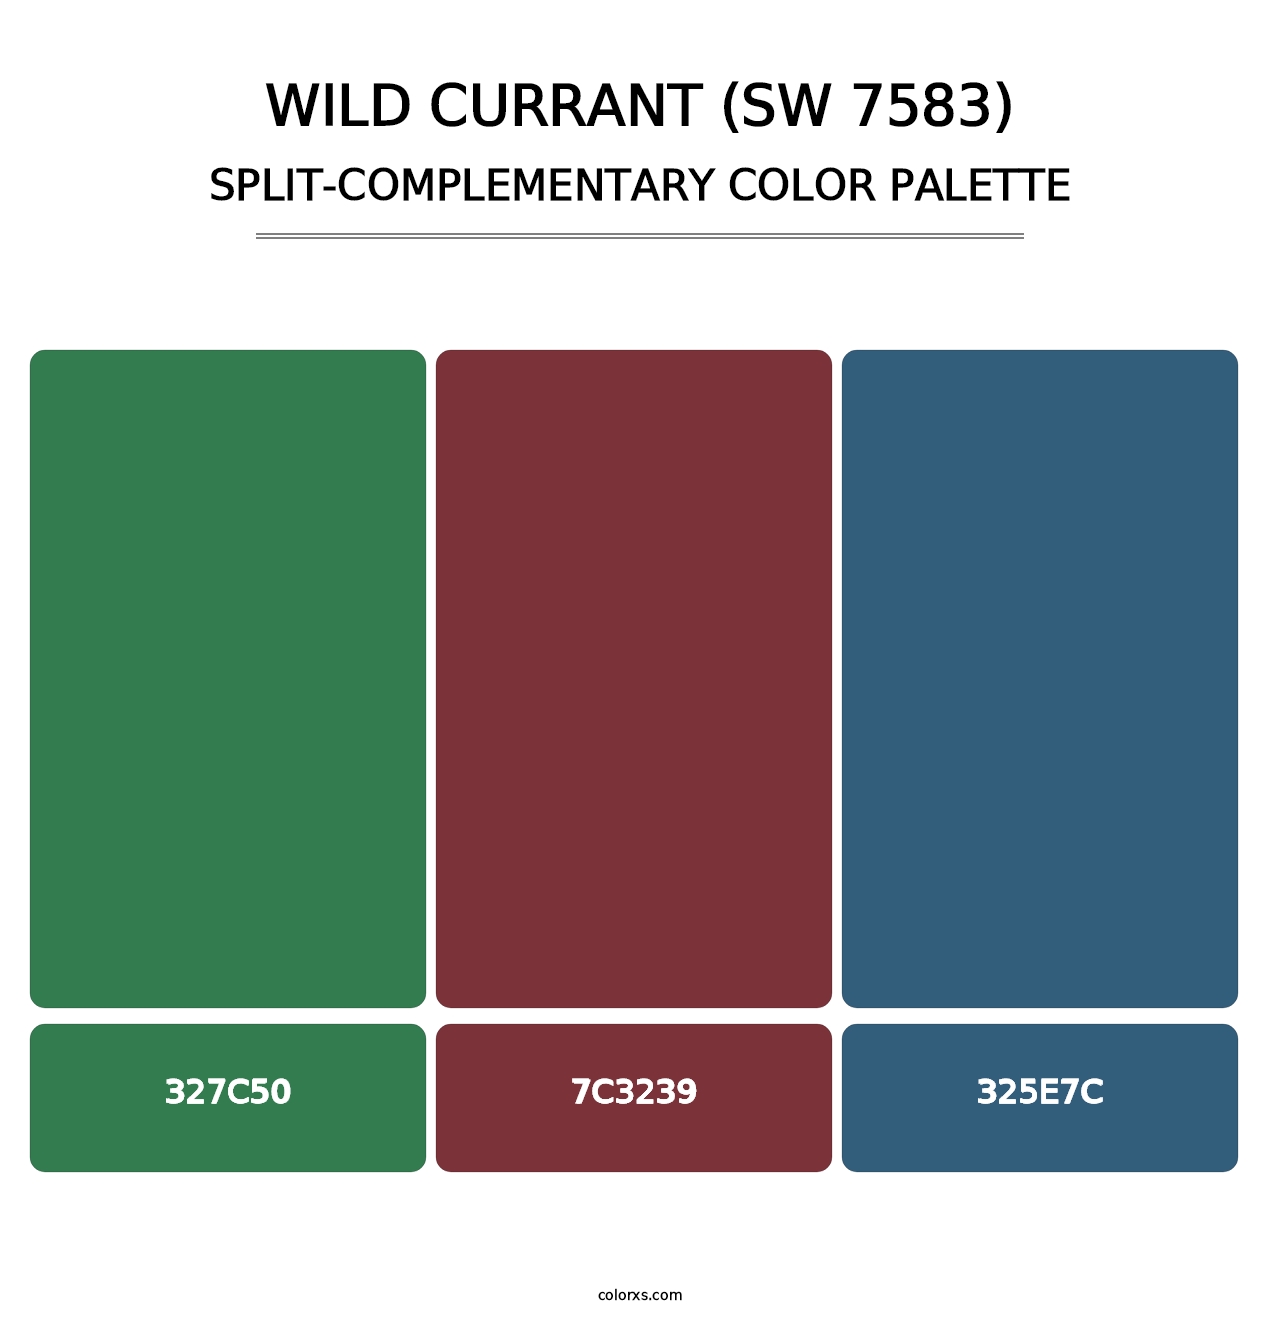 Wild Currant (SW 7583) - Split-Complementary Color Palette